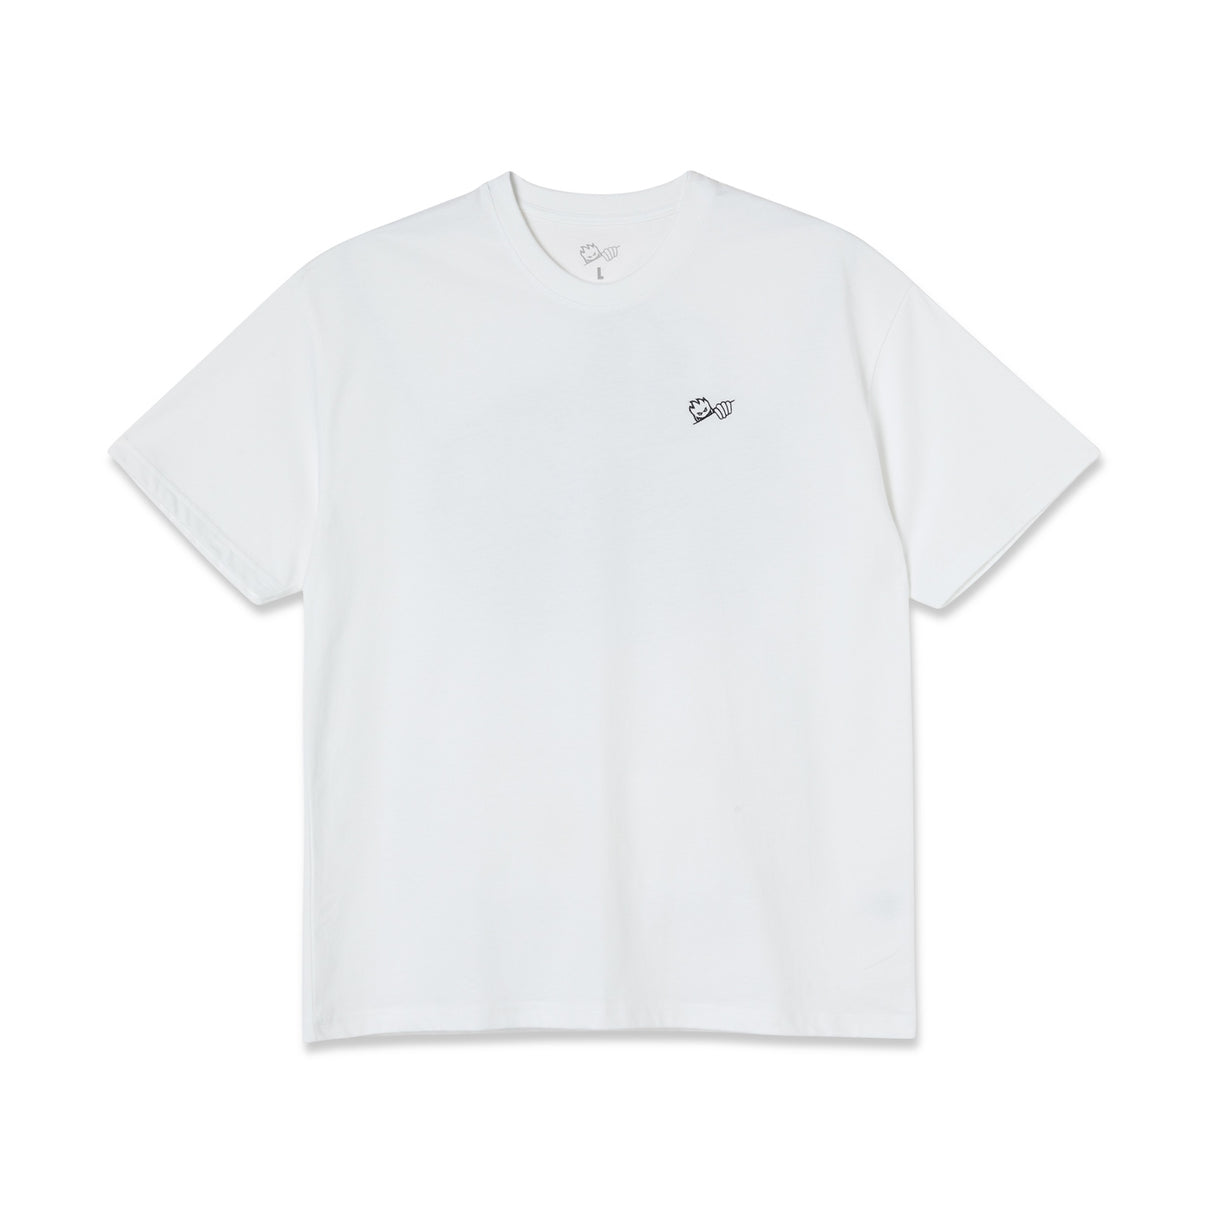 Last Resort x Spitfire Swirl White S/s Shirt